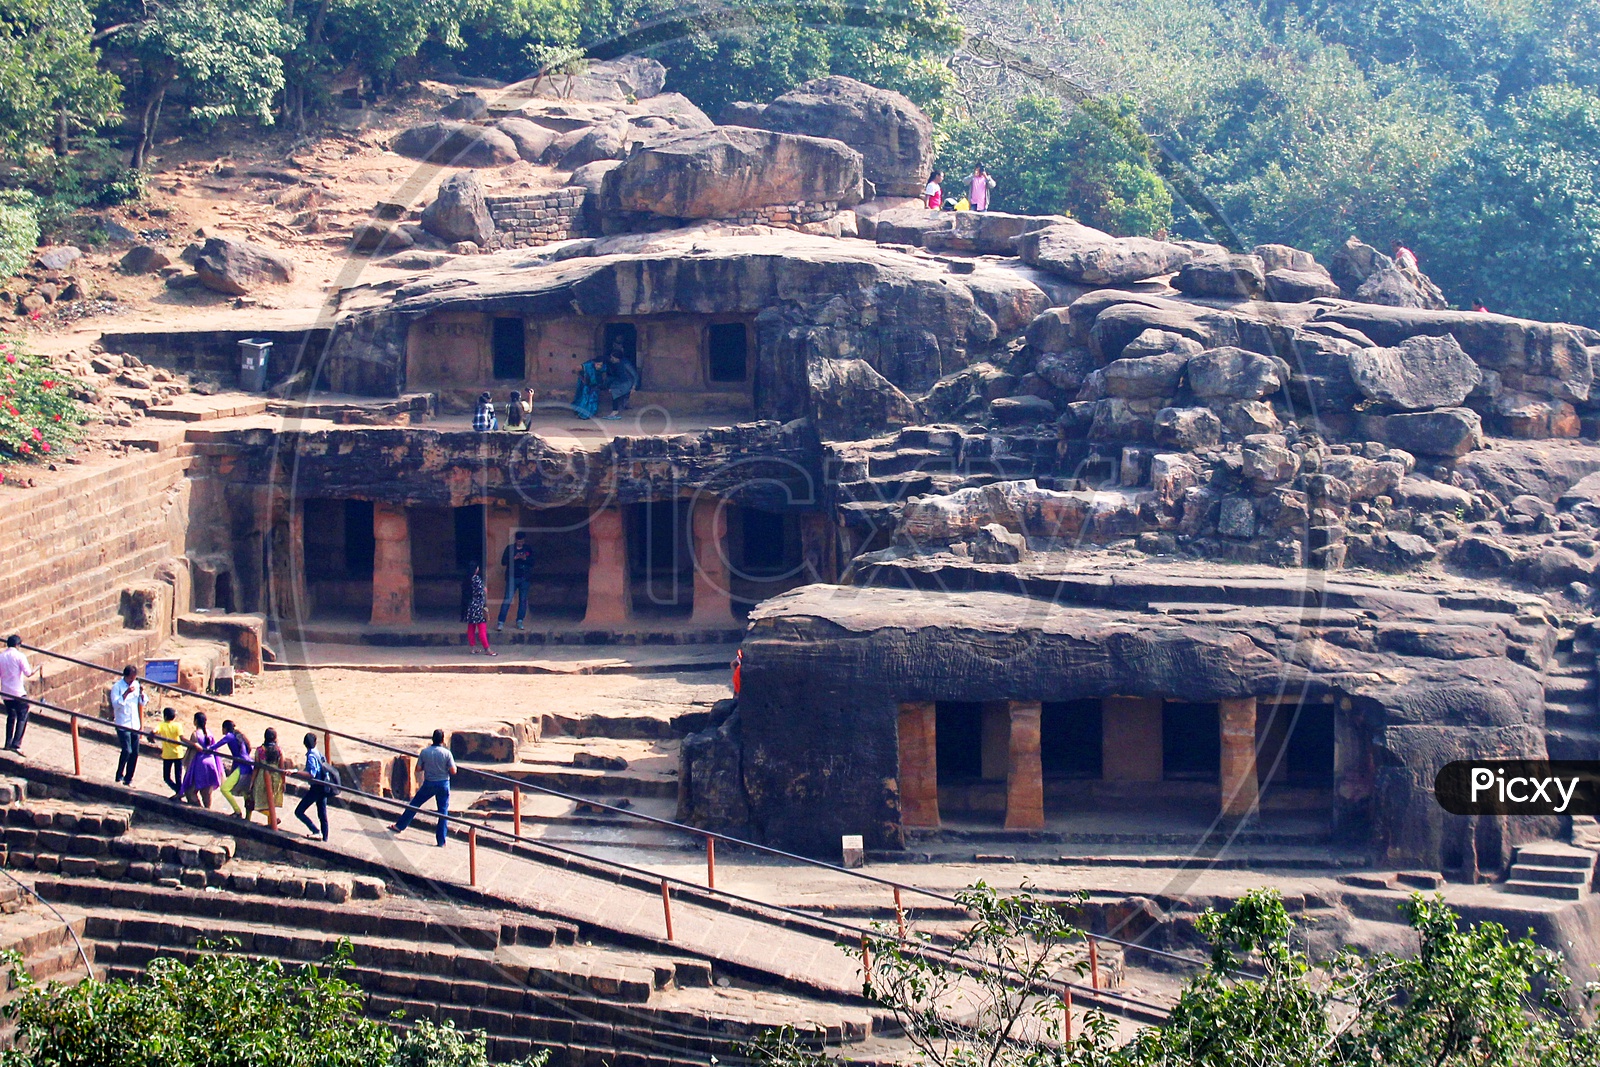 Udaigiri Jain Caves